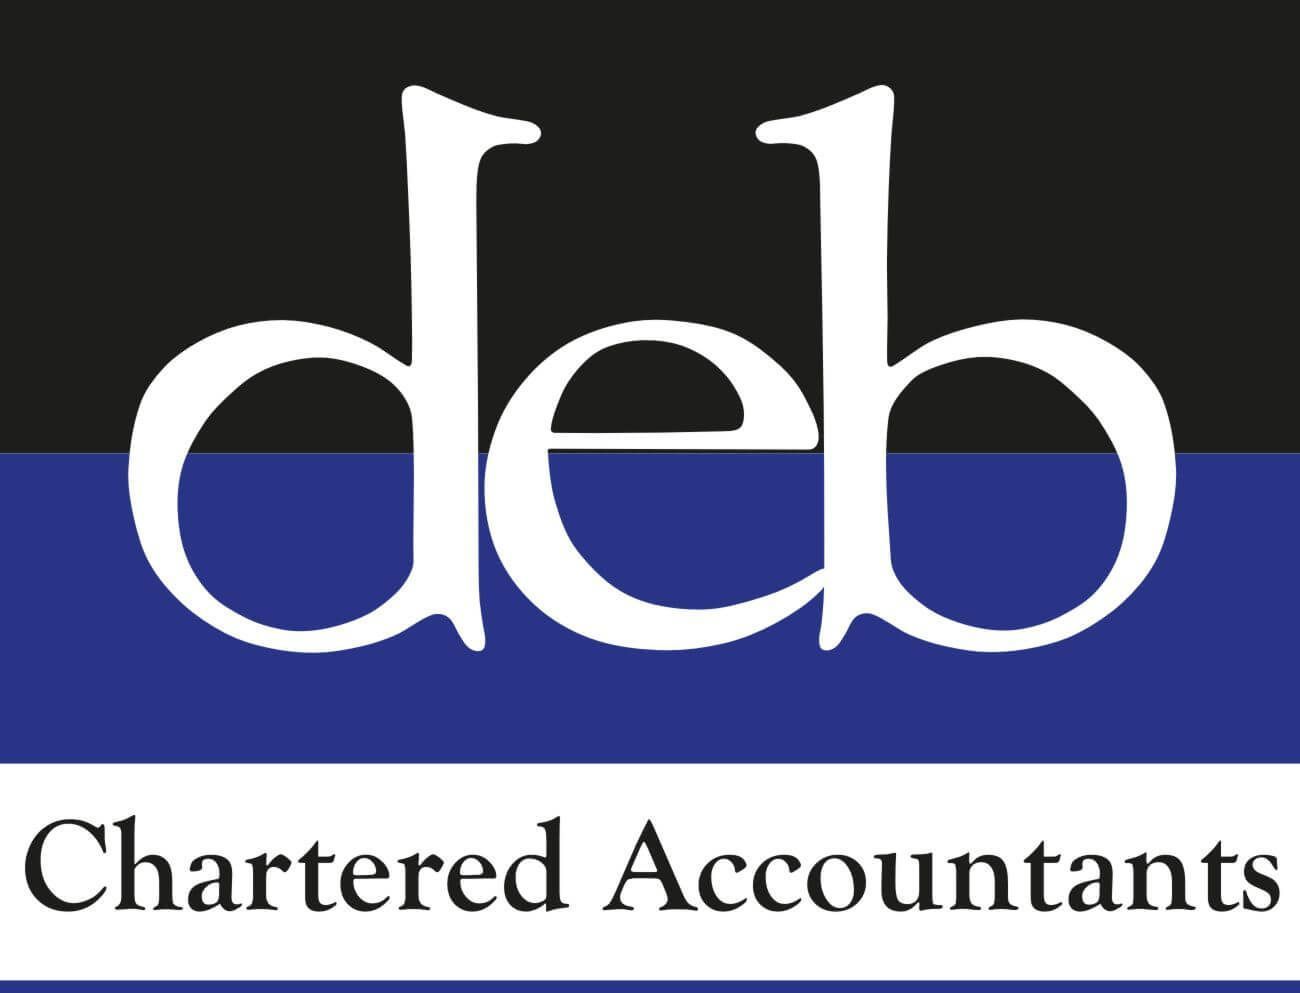 Deb Accountants